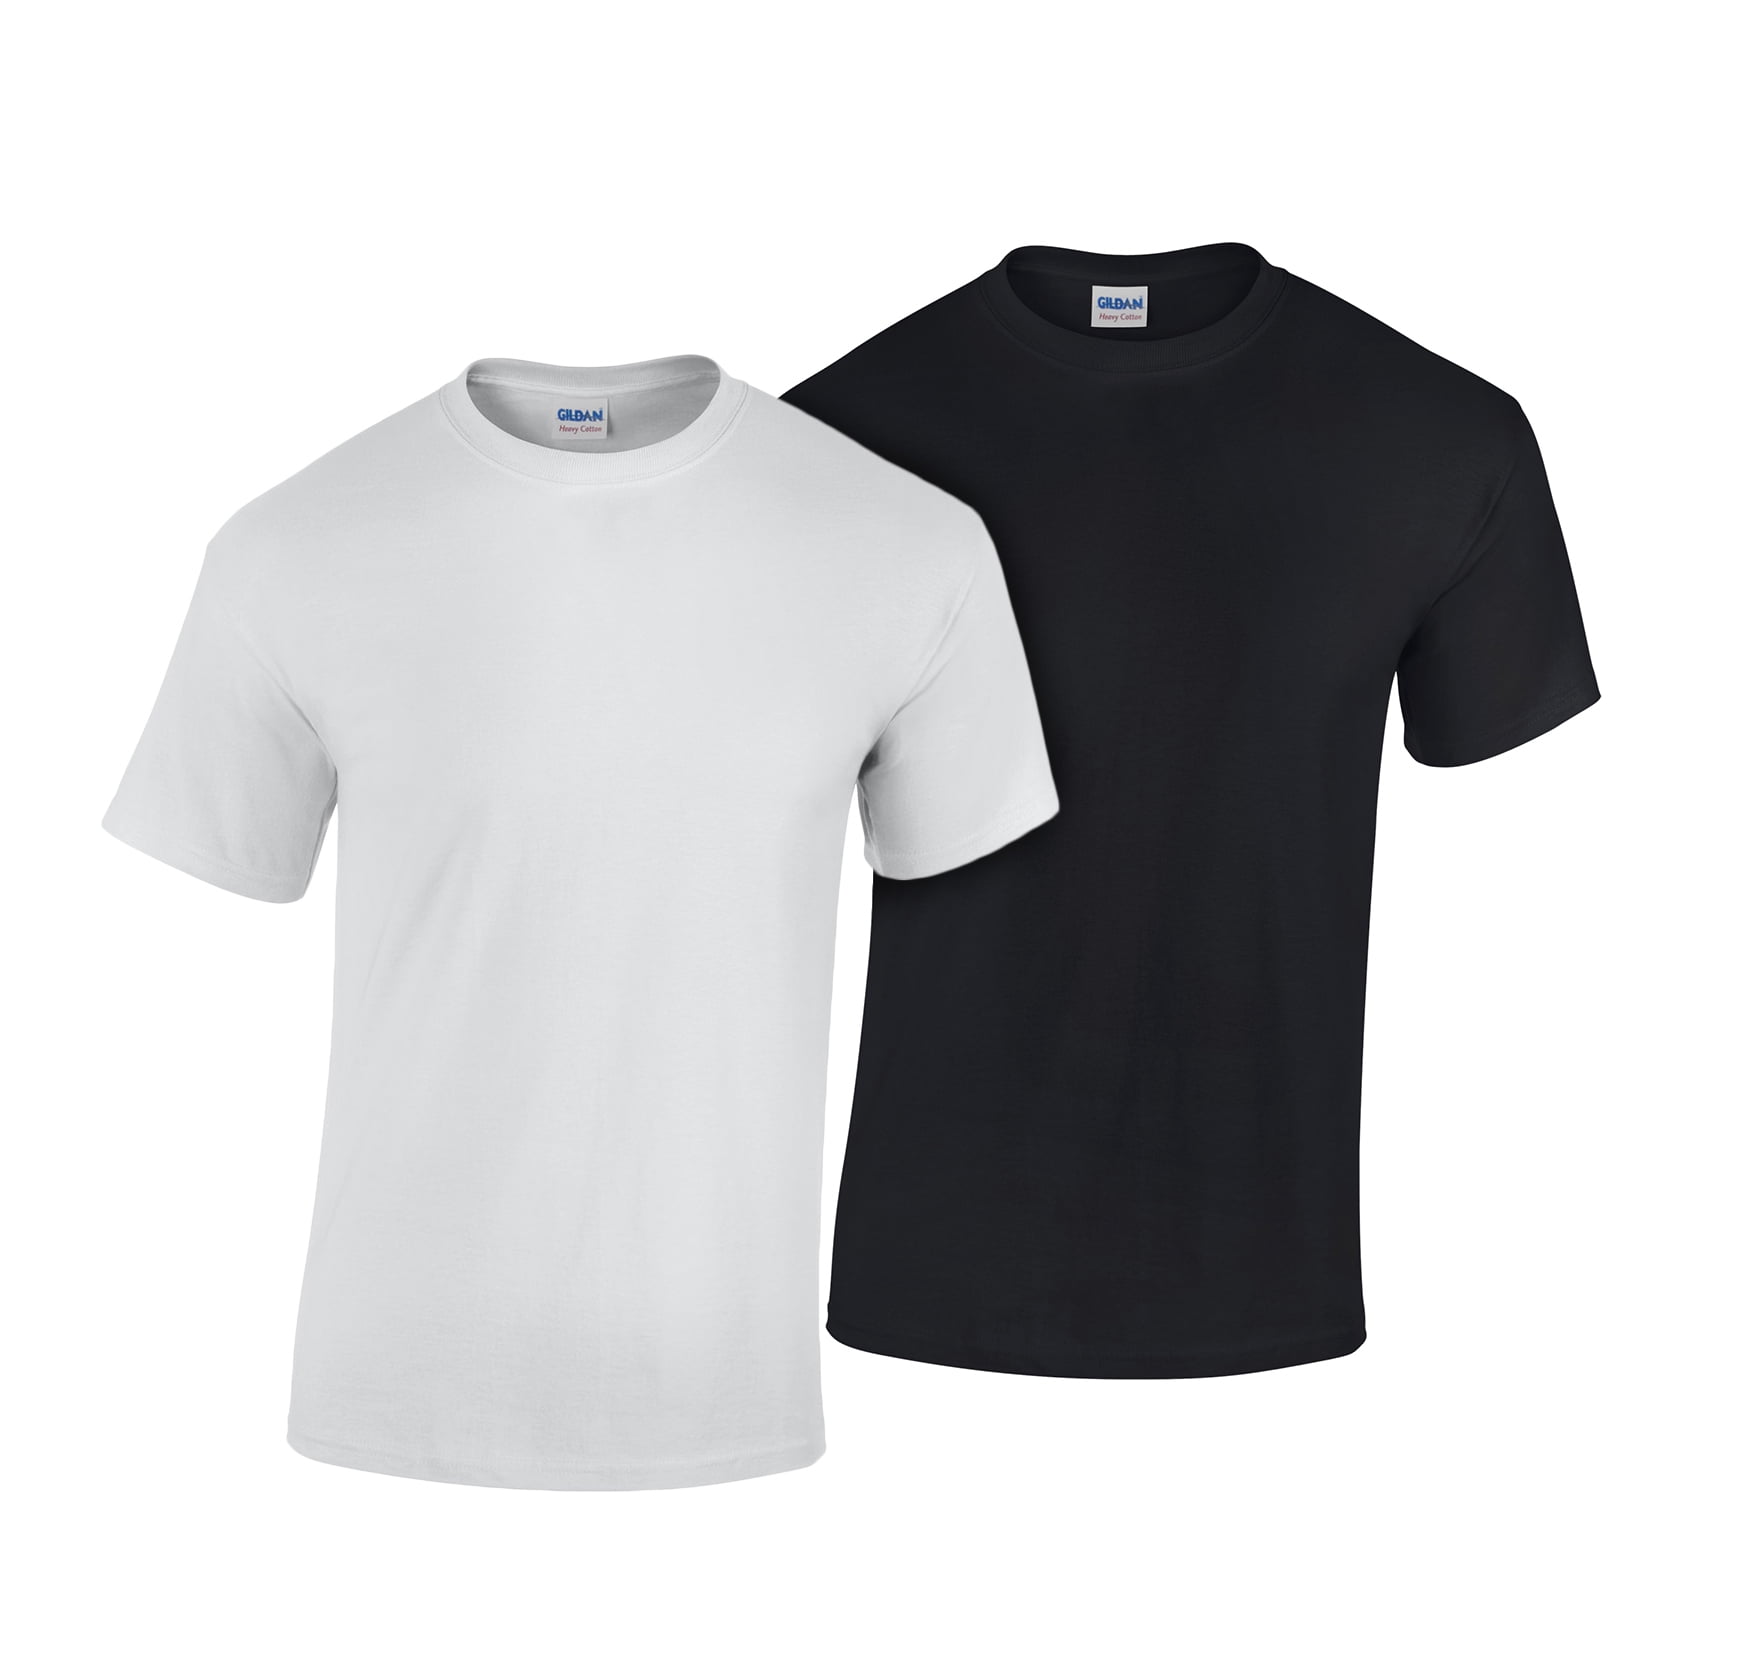 Blank shirts Gildan G500 T-Shirts 100 